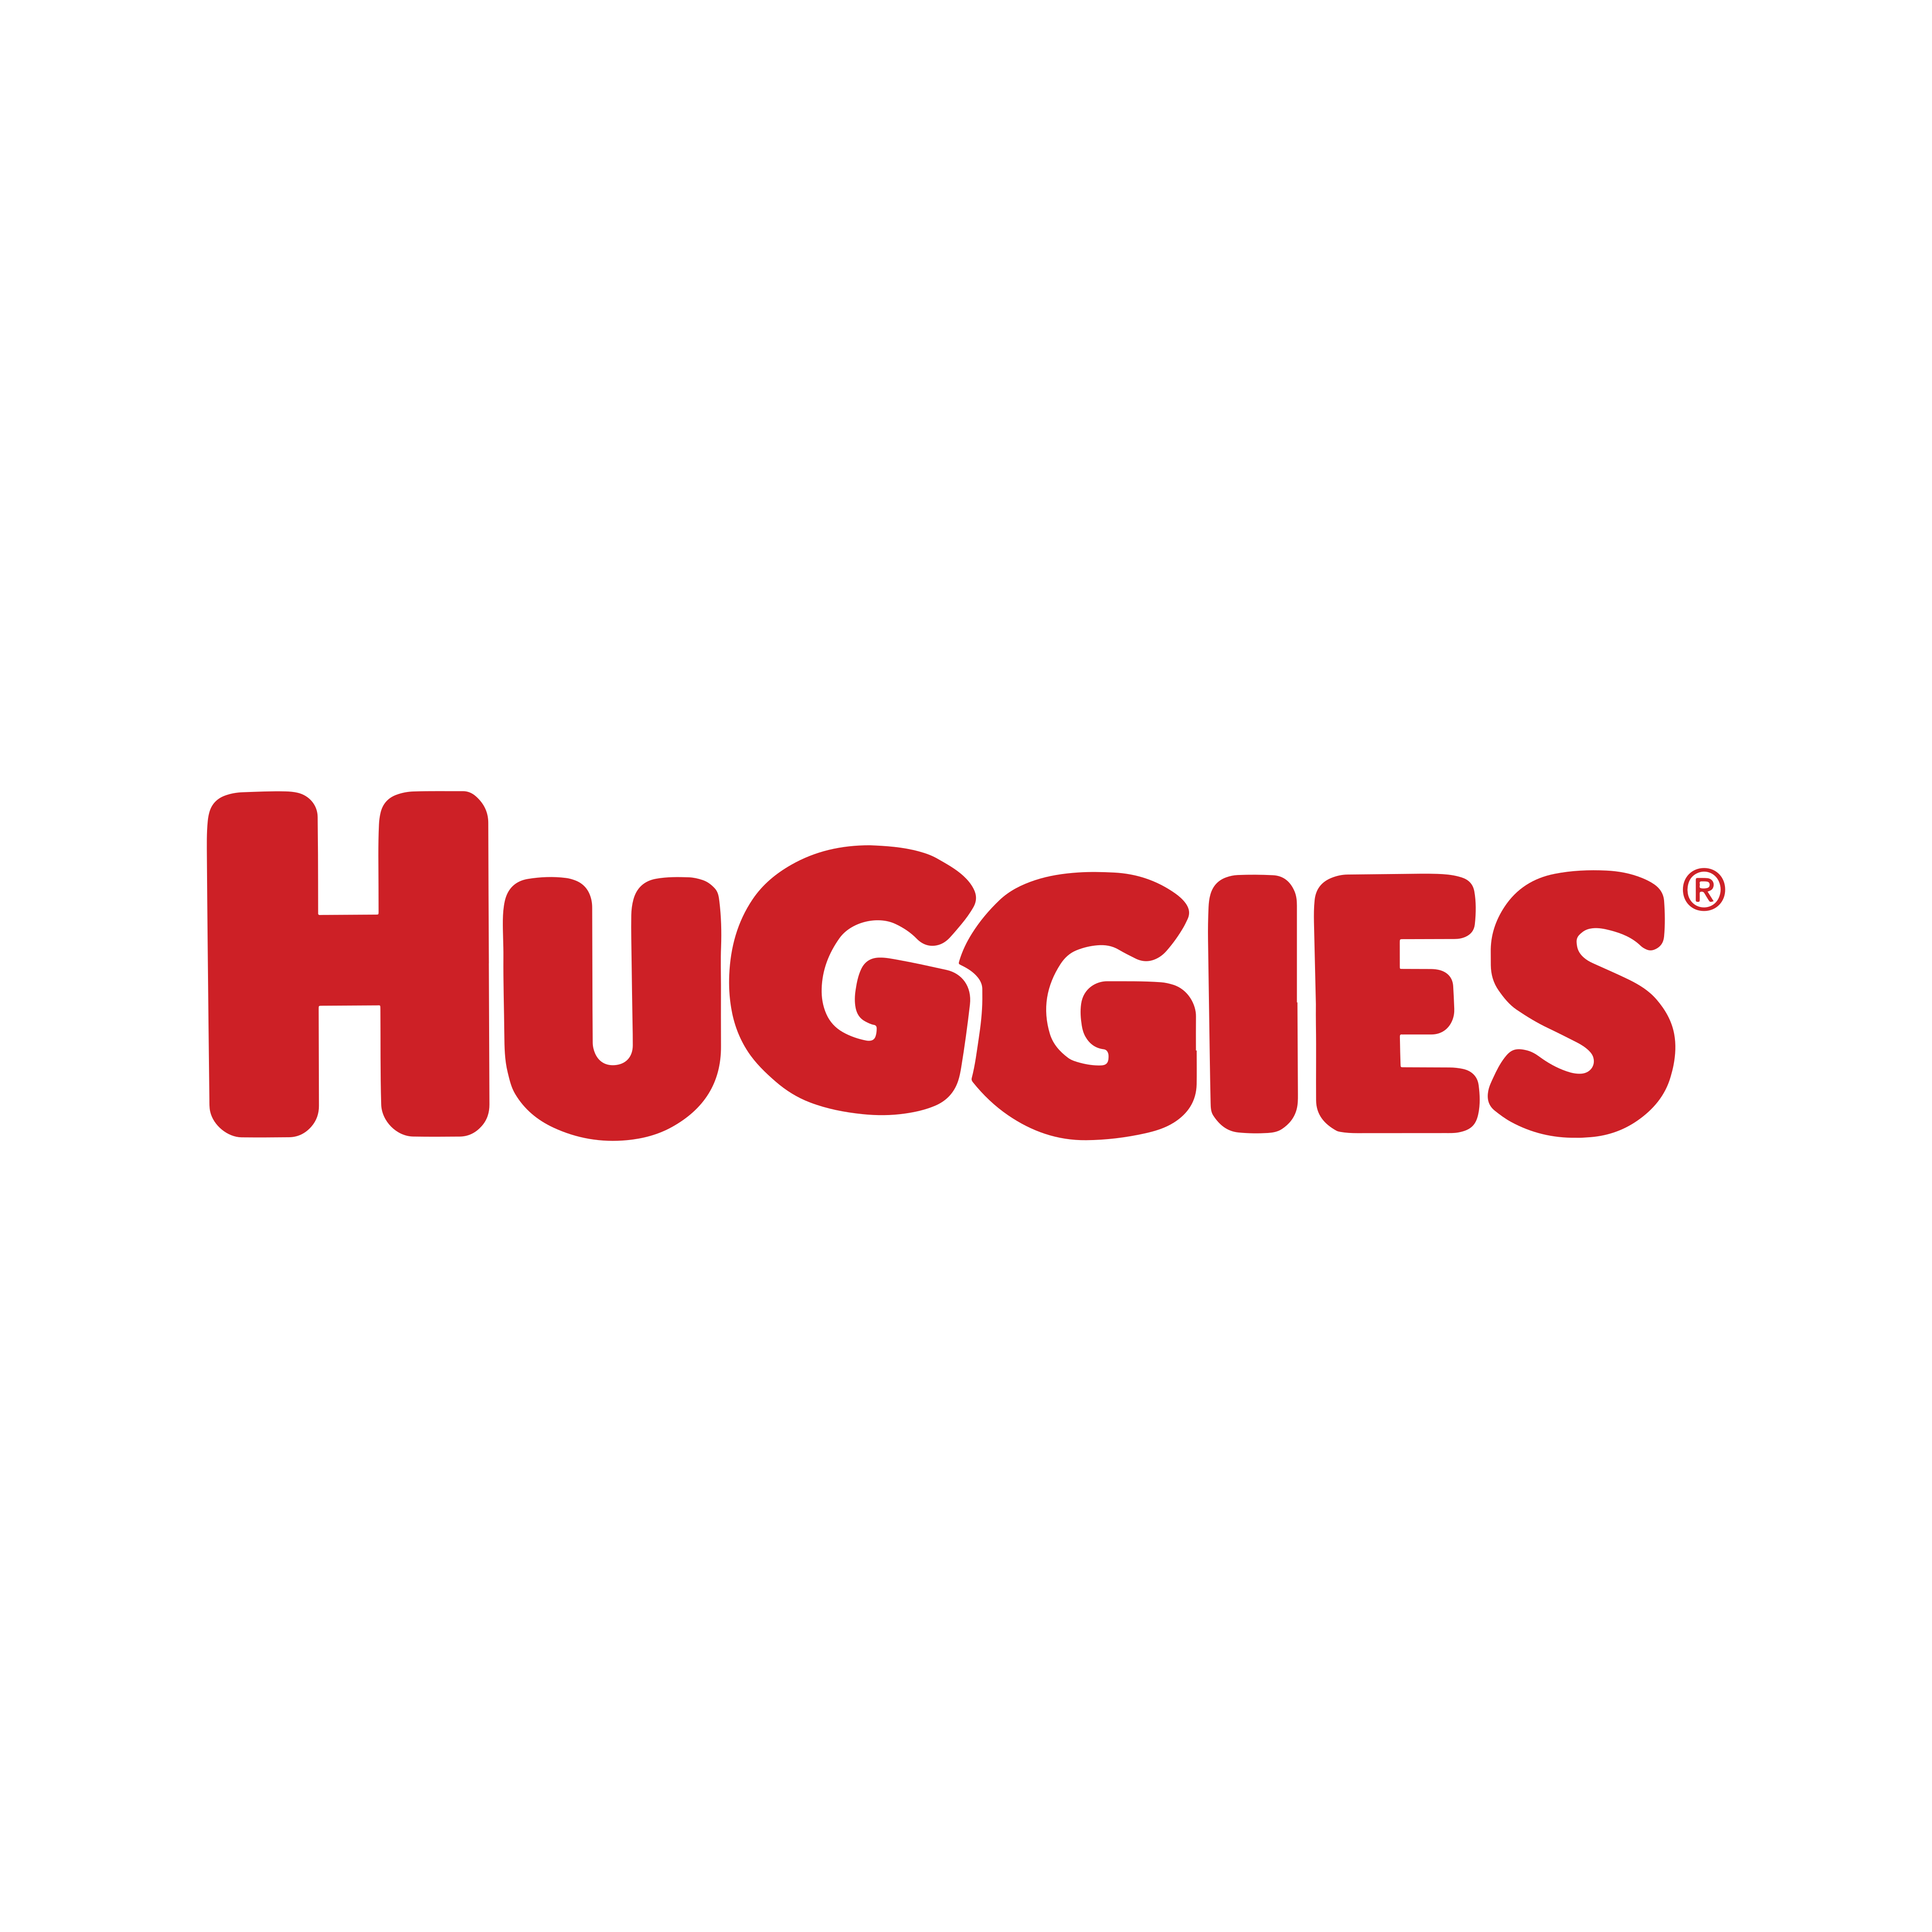 huggies logo 0 - Huggies Logo